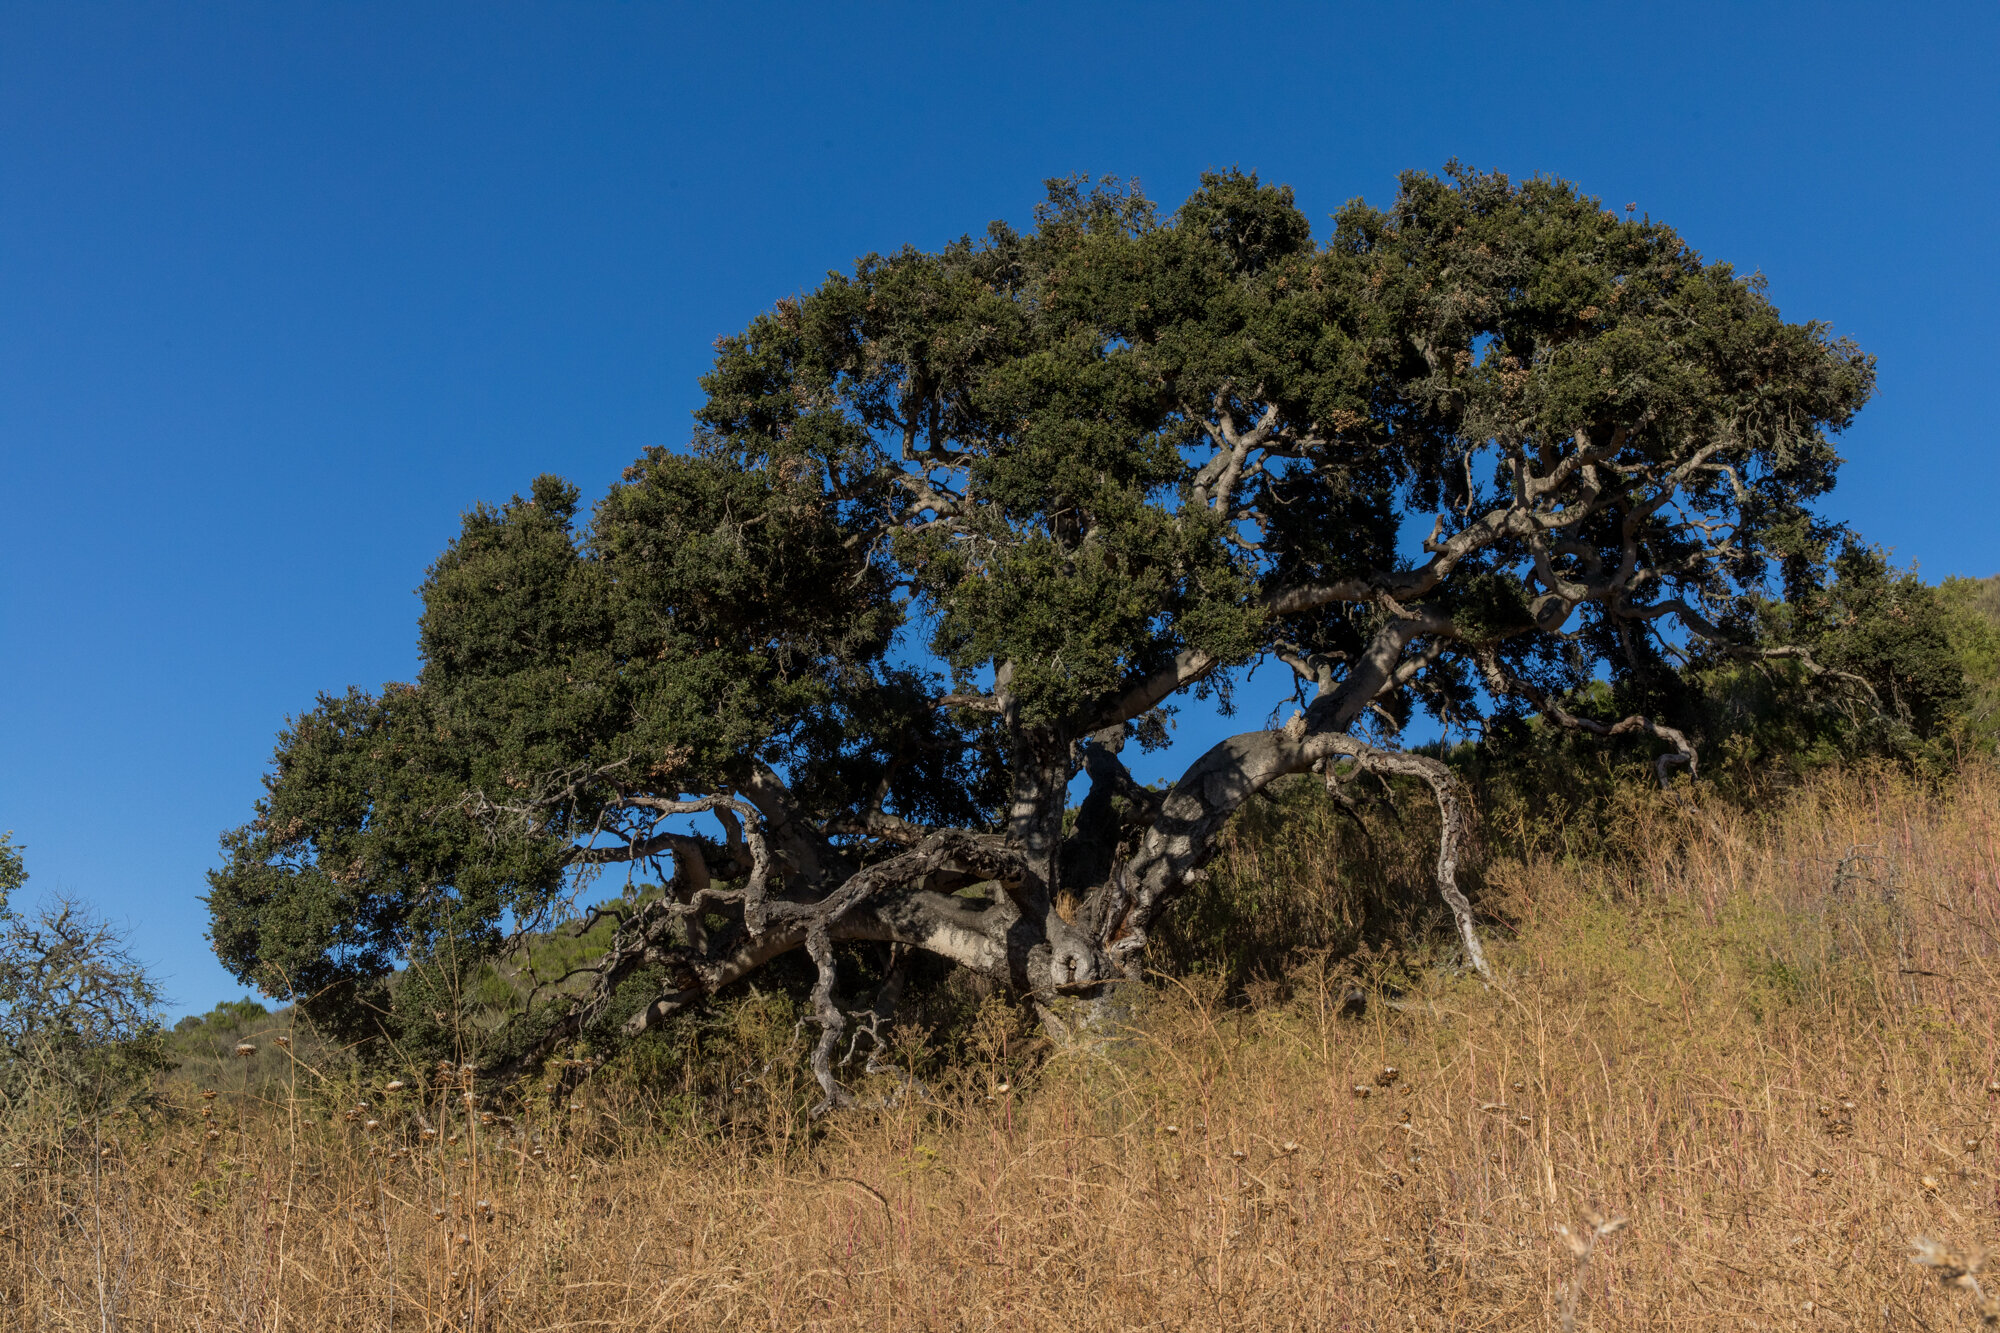 A magnificent California oak